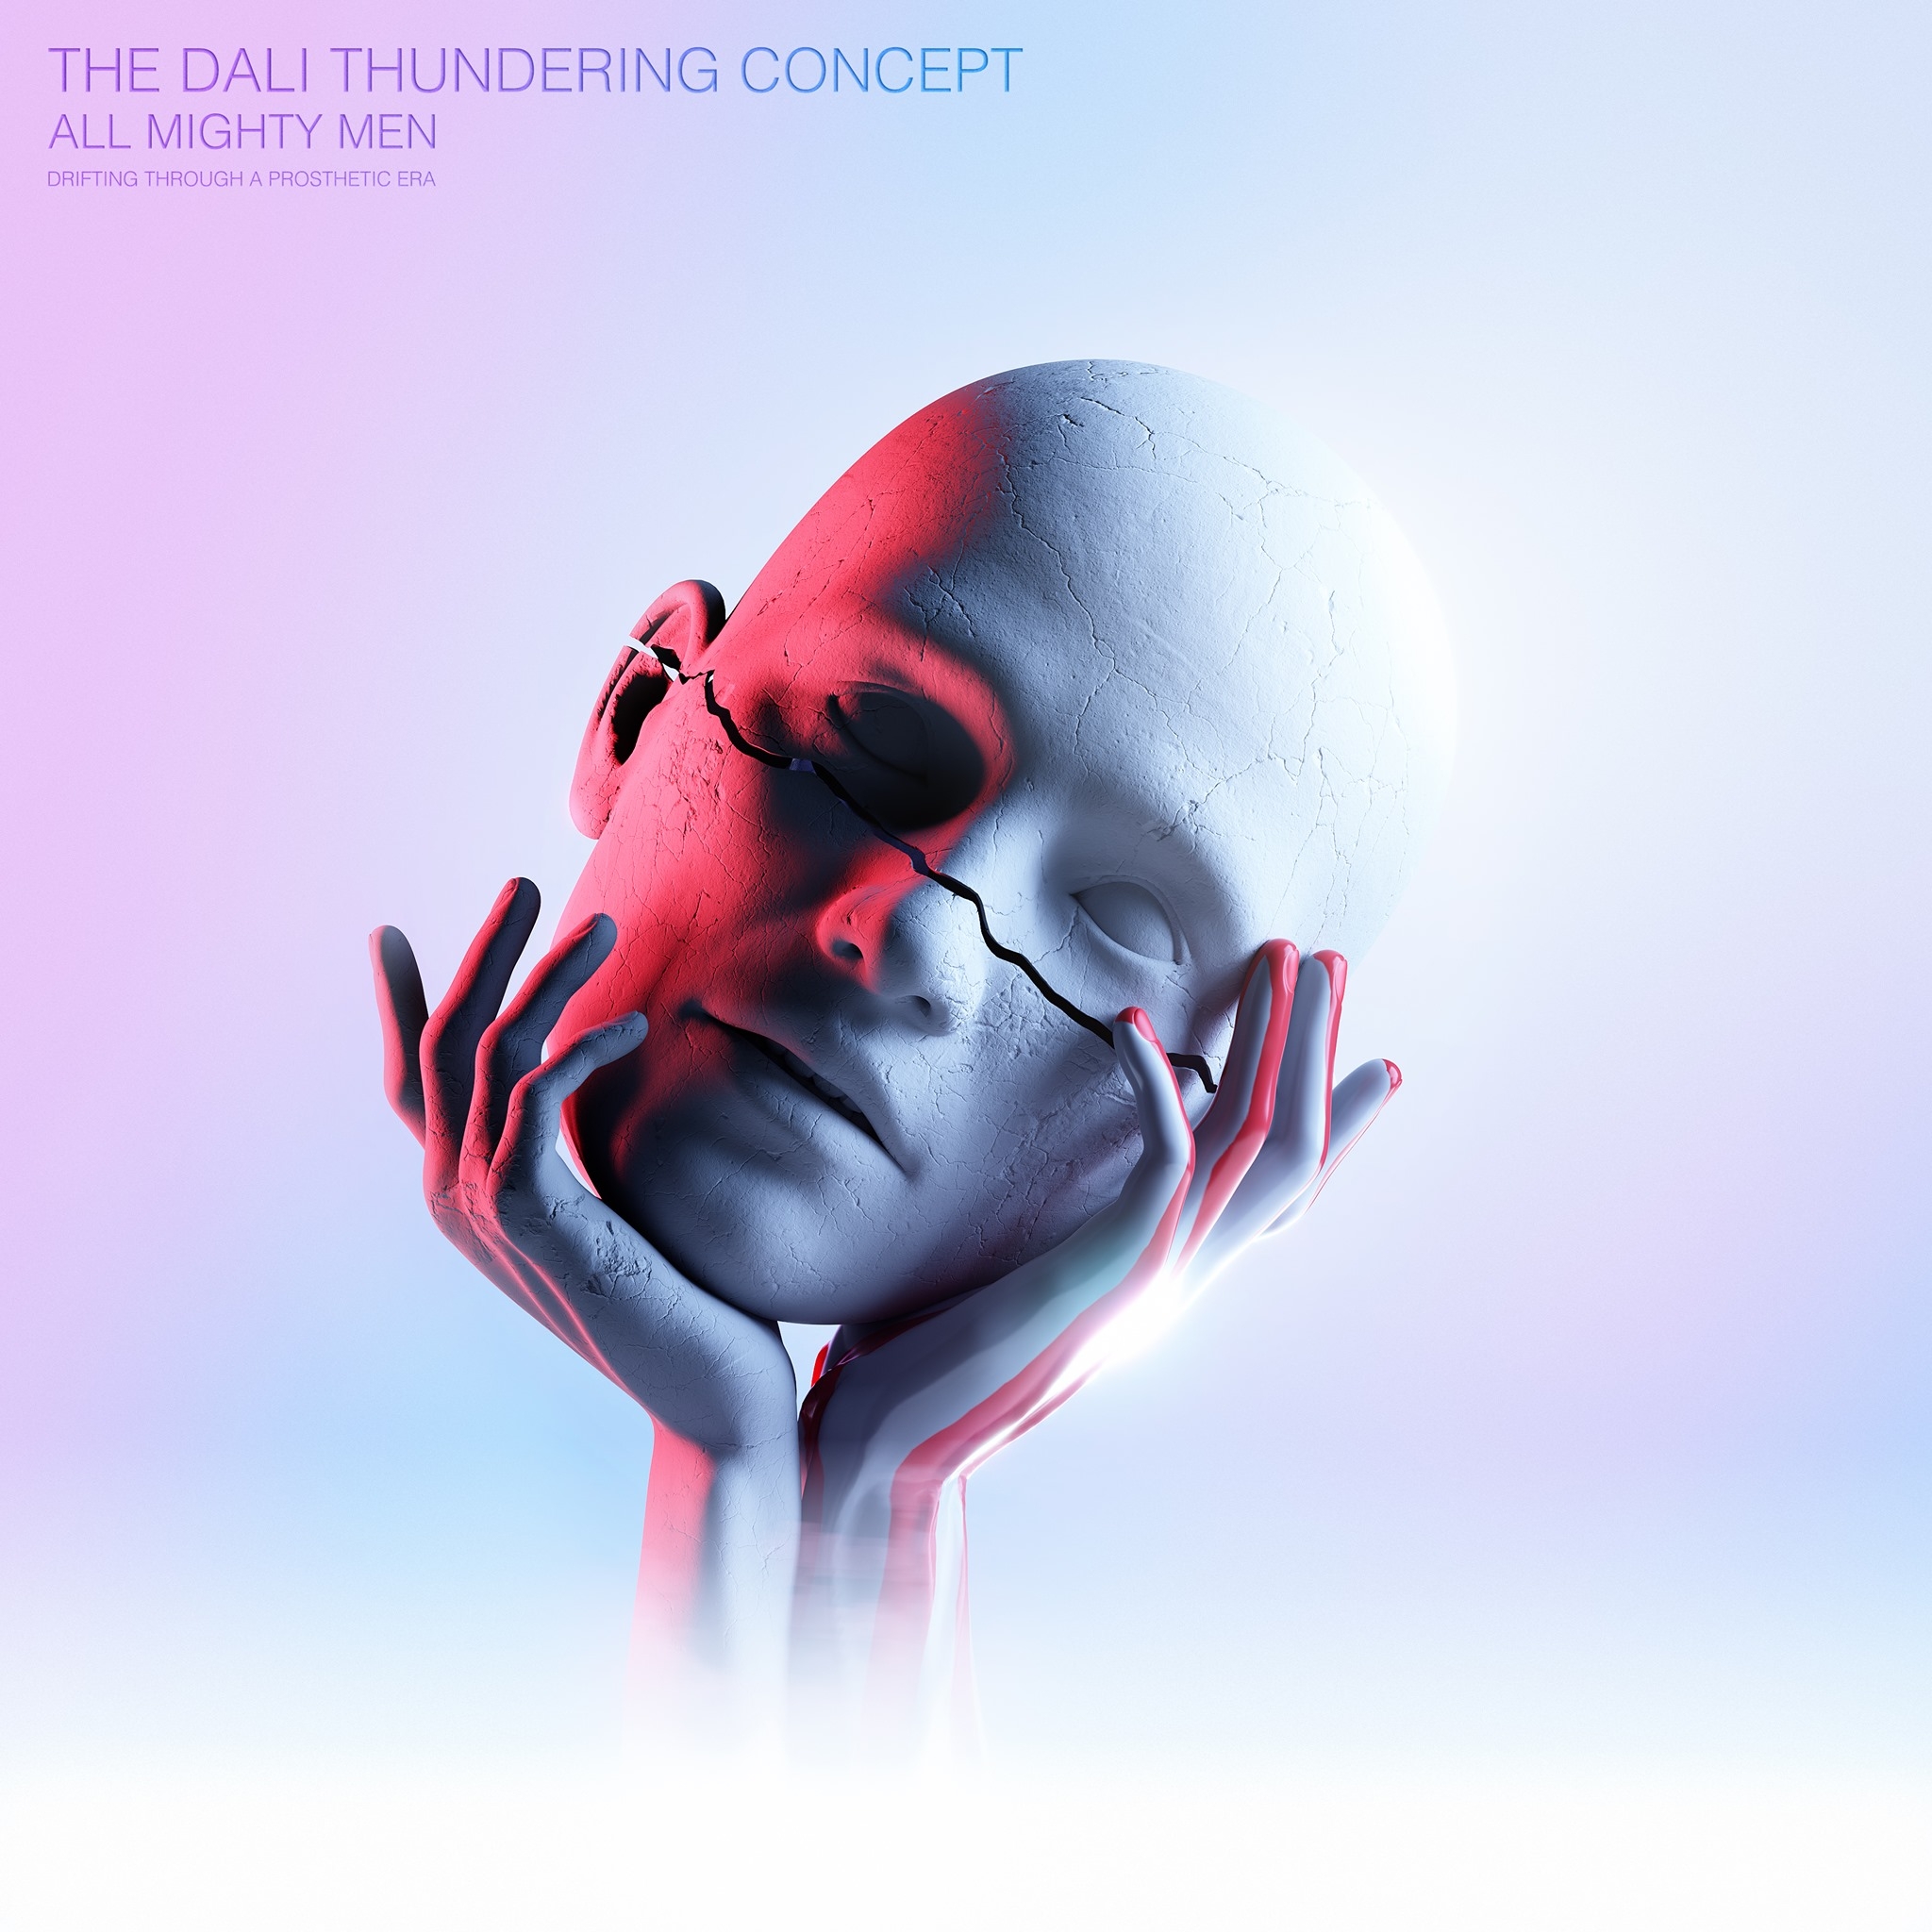 The Dali Thundering Concept